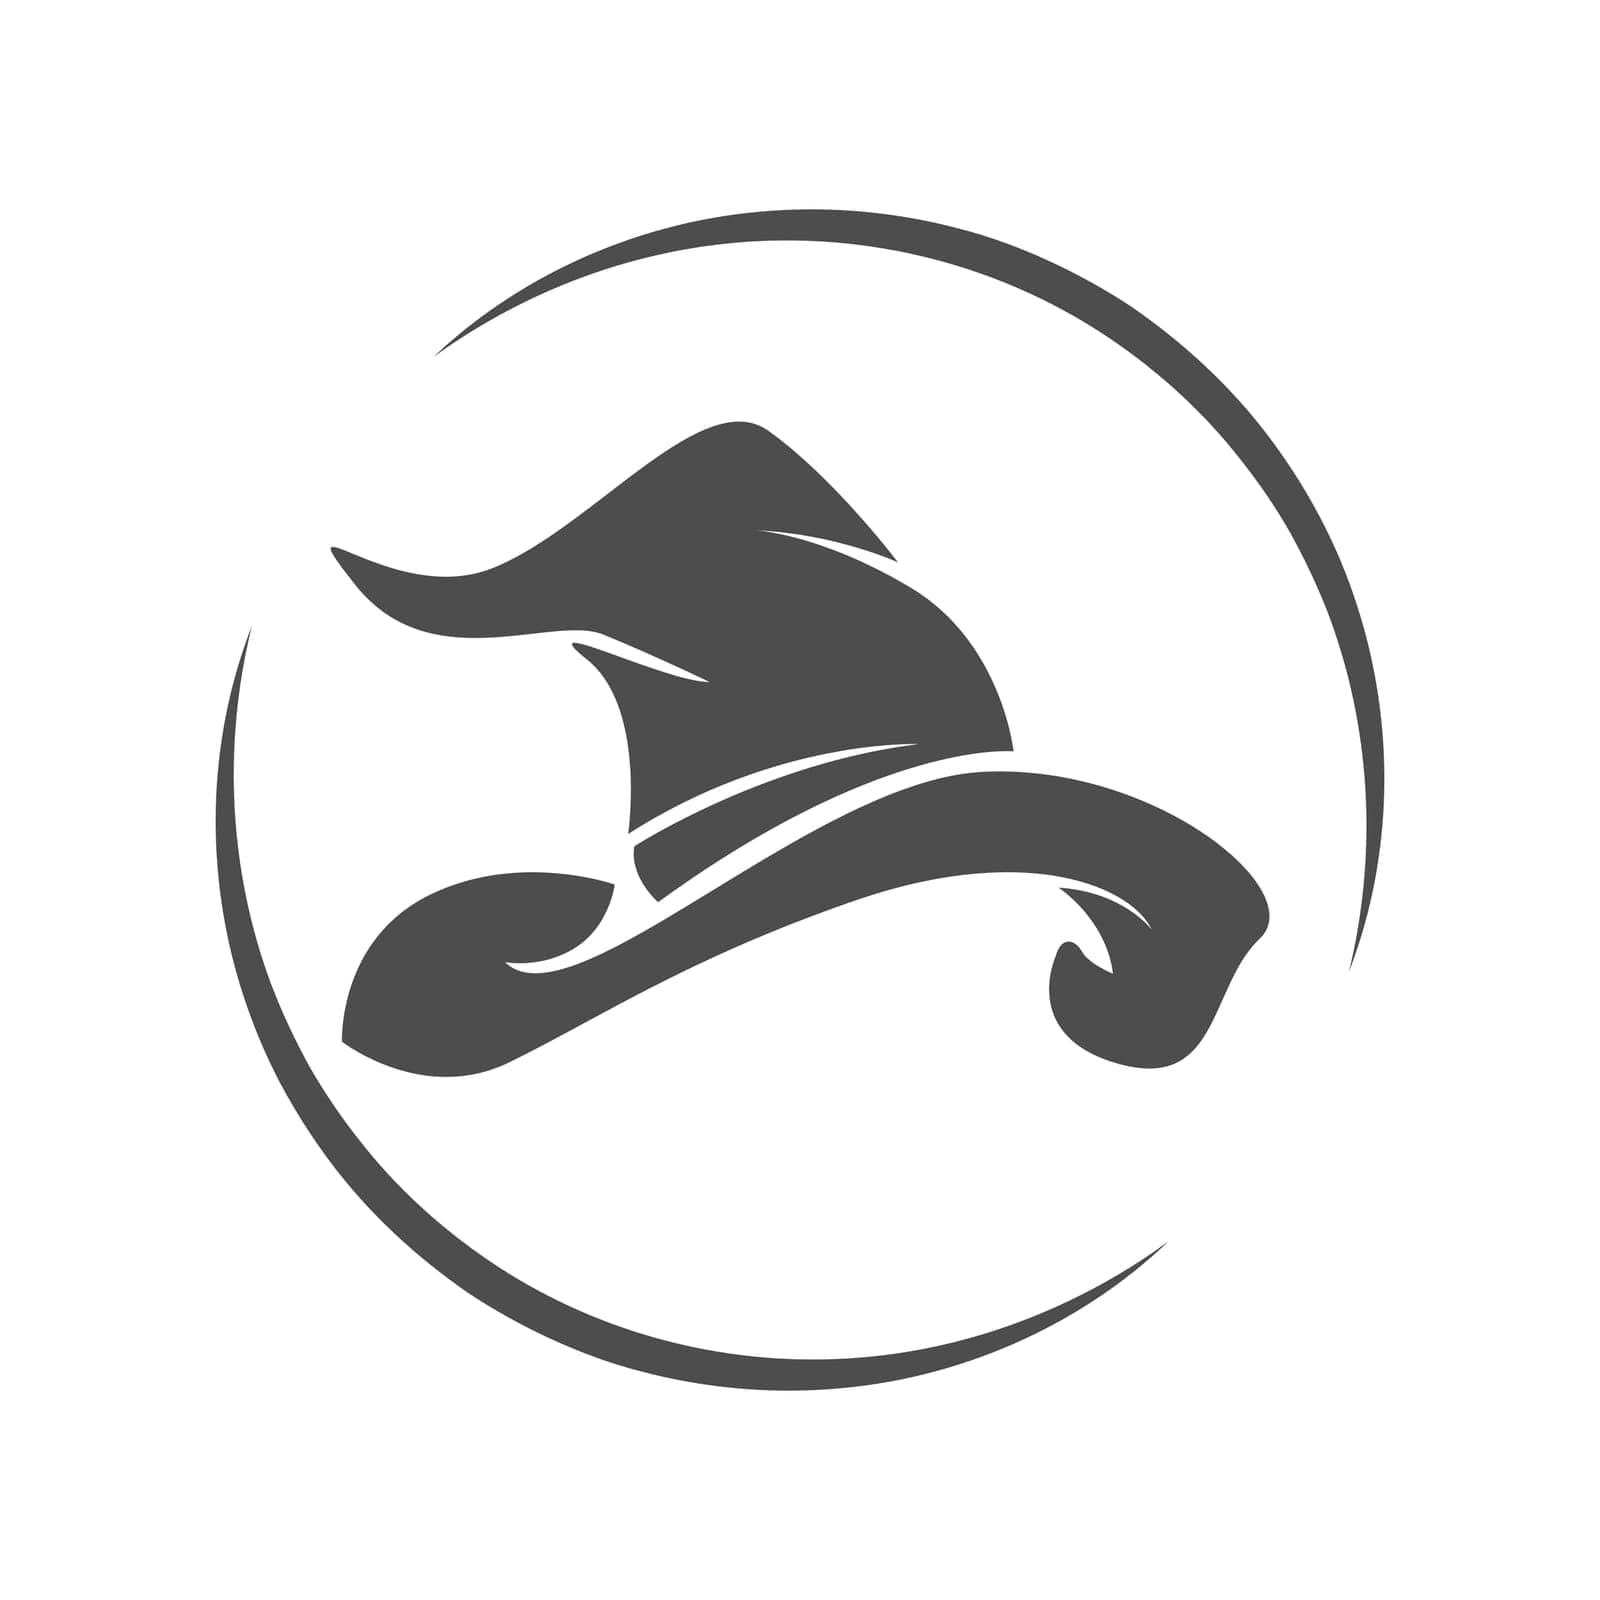 Wizard logo icon design illustration